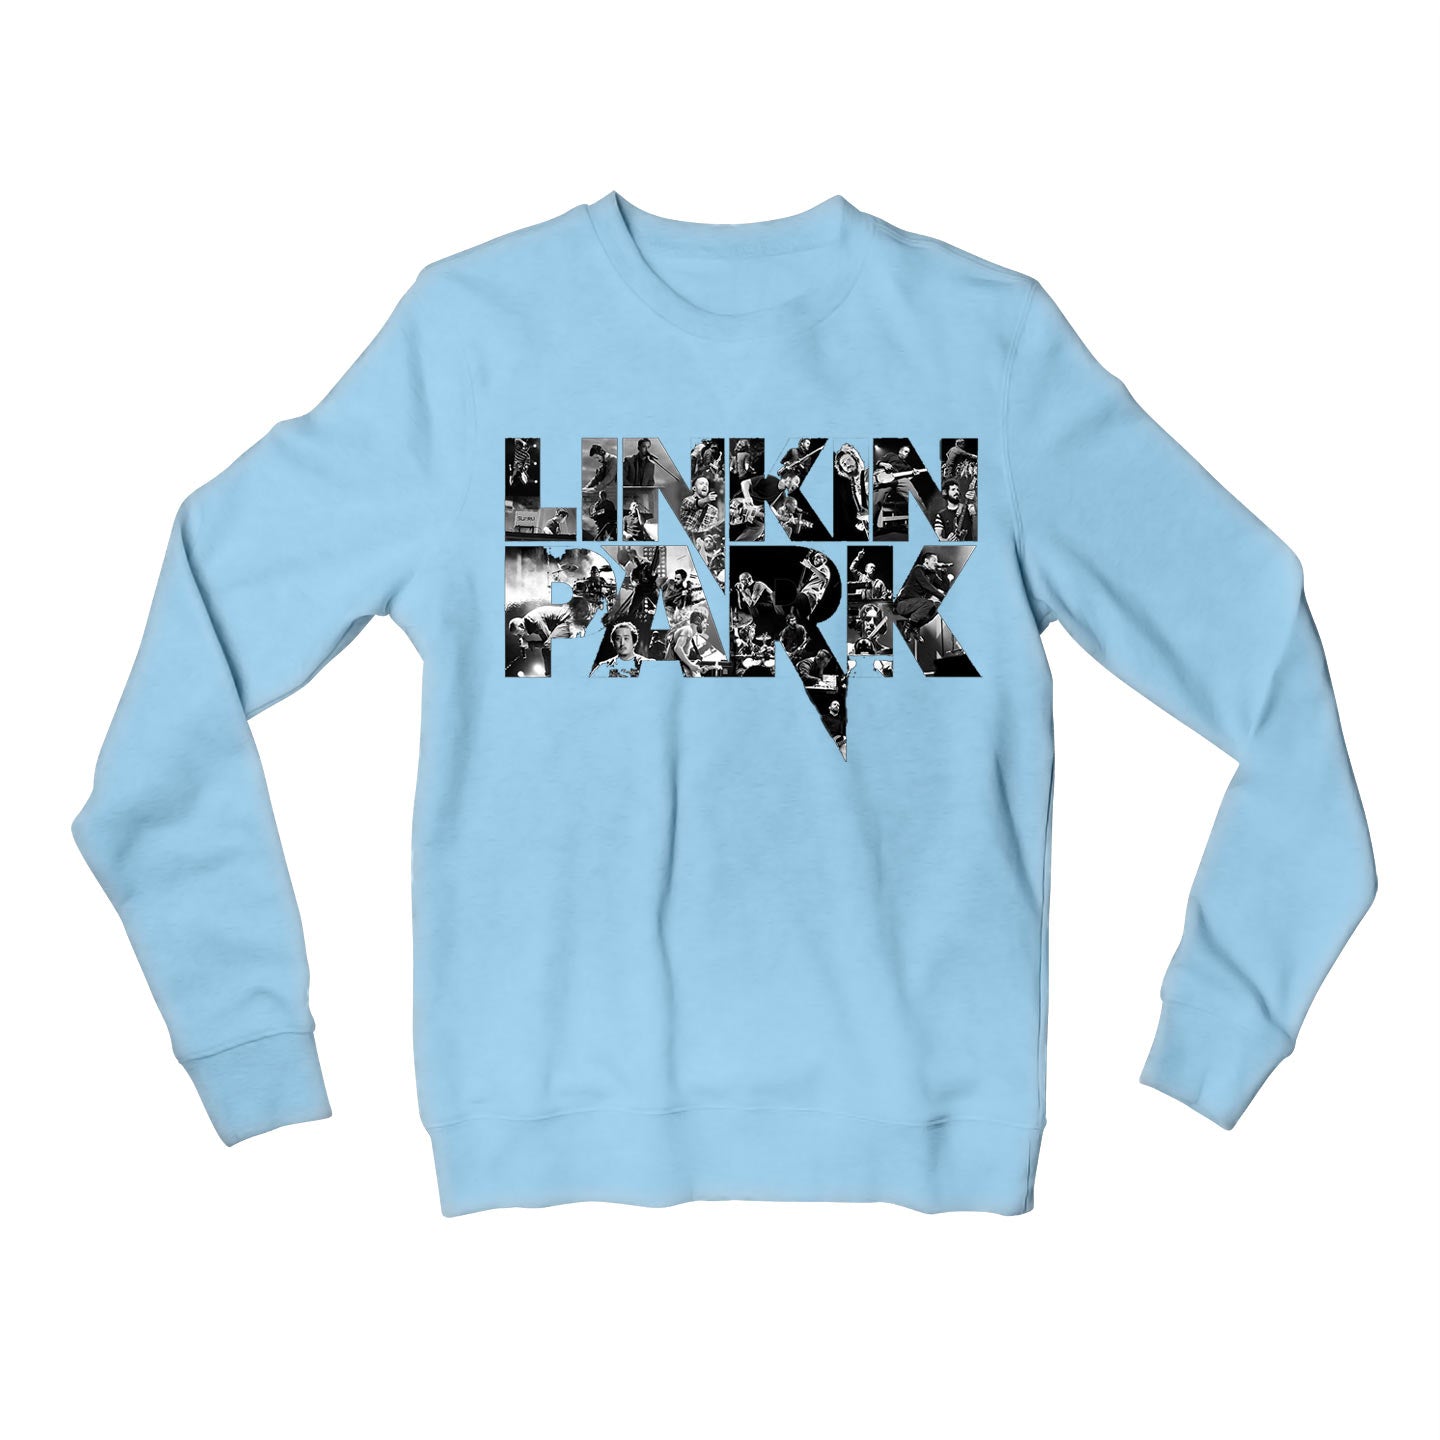 linkin park fan art sweatshirt upper winterwear music band buy online india the banyan tee tbt men women girls boys unisex gray